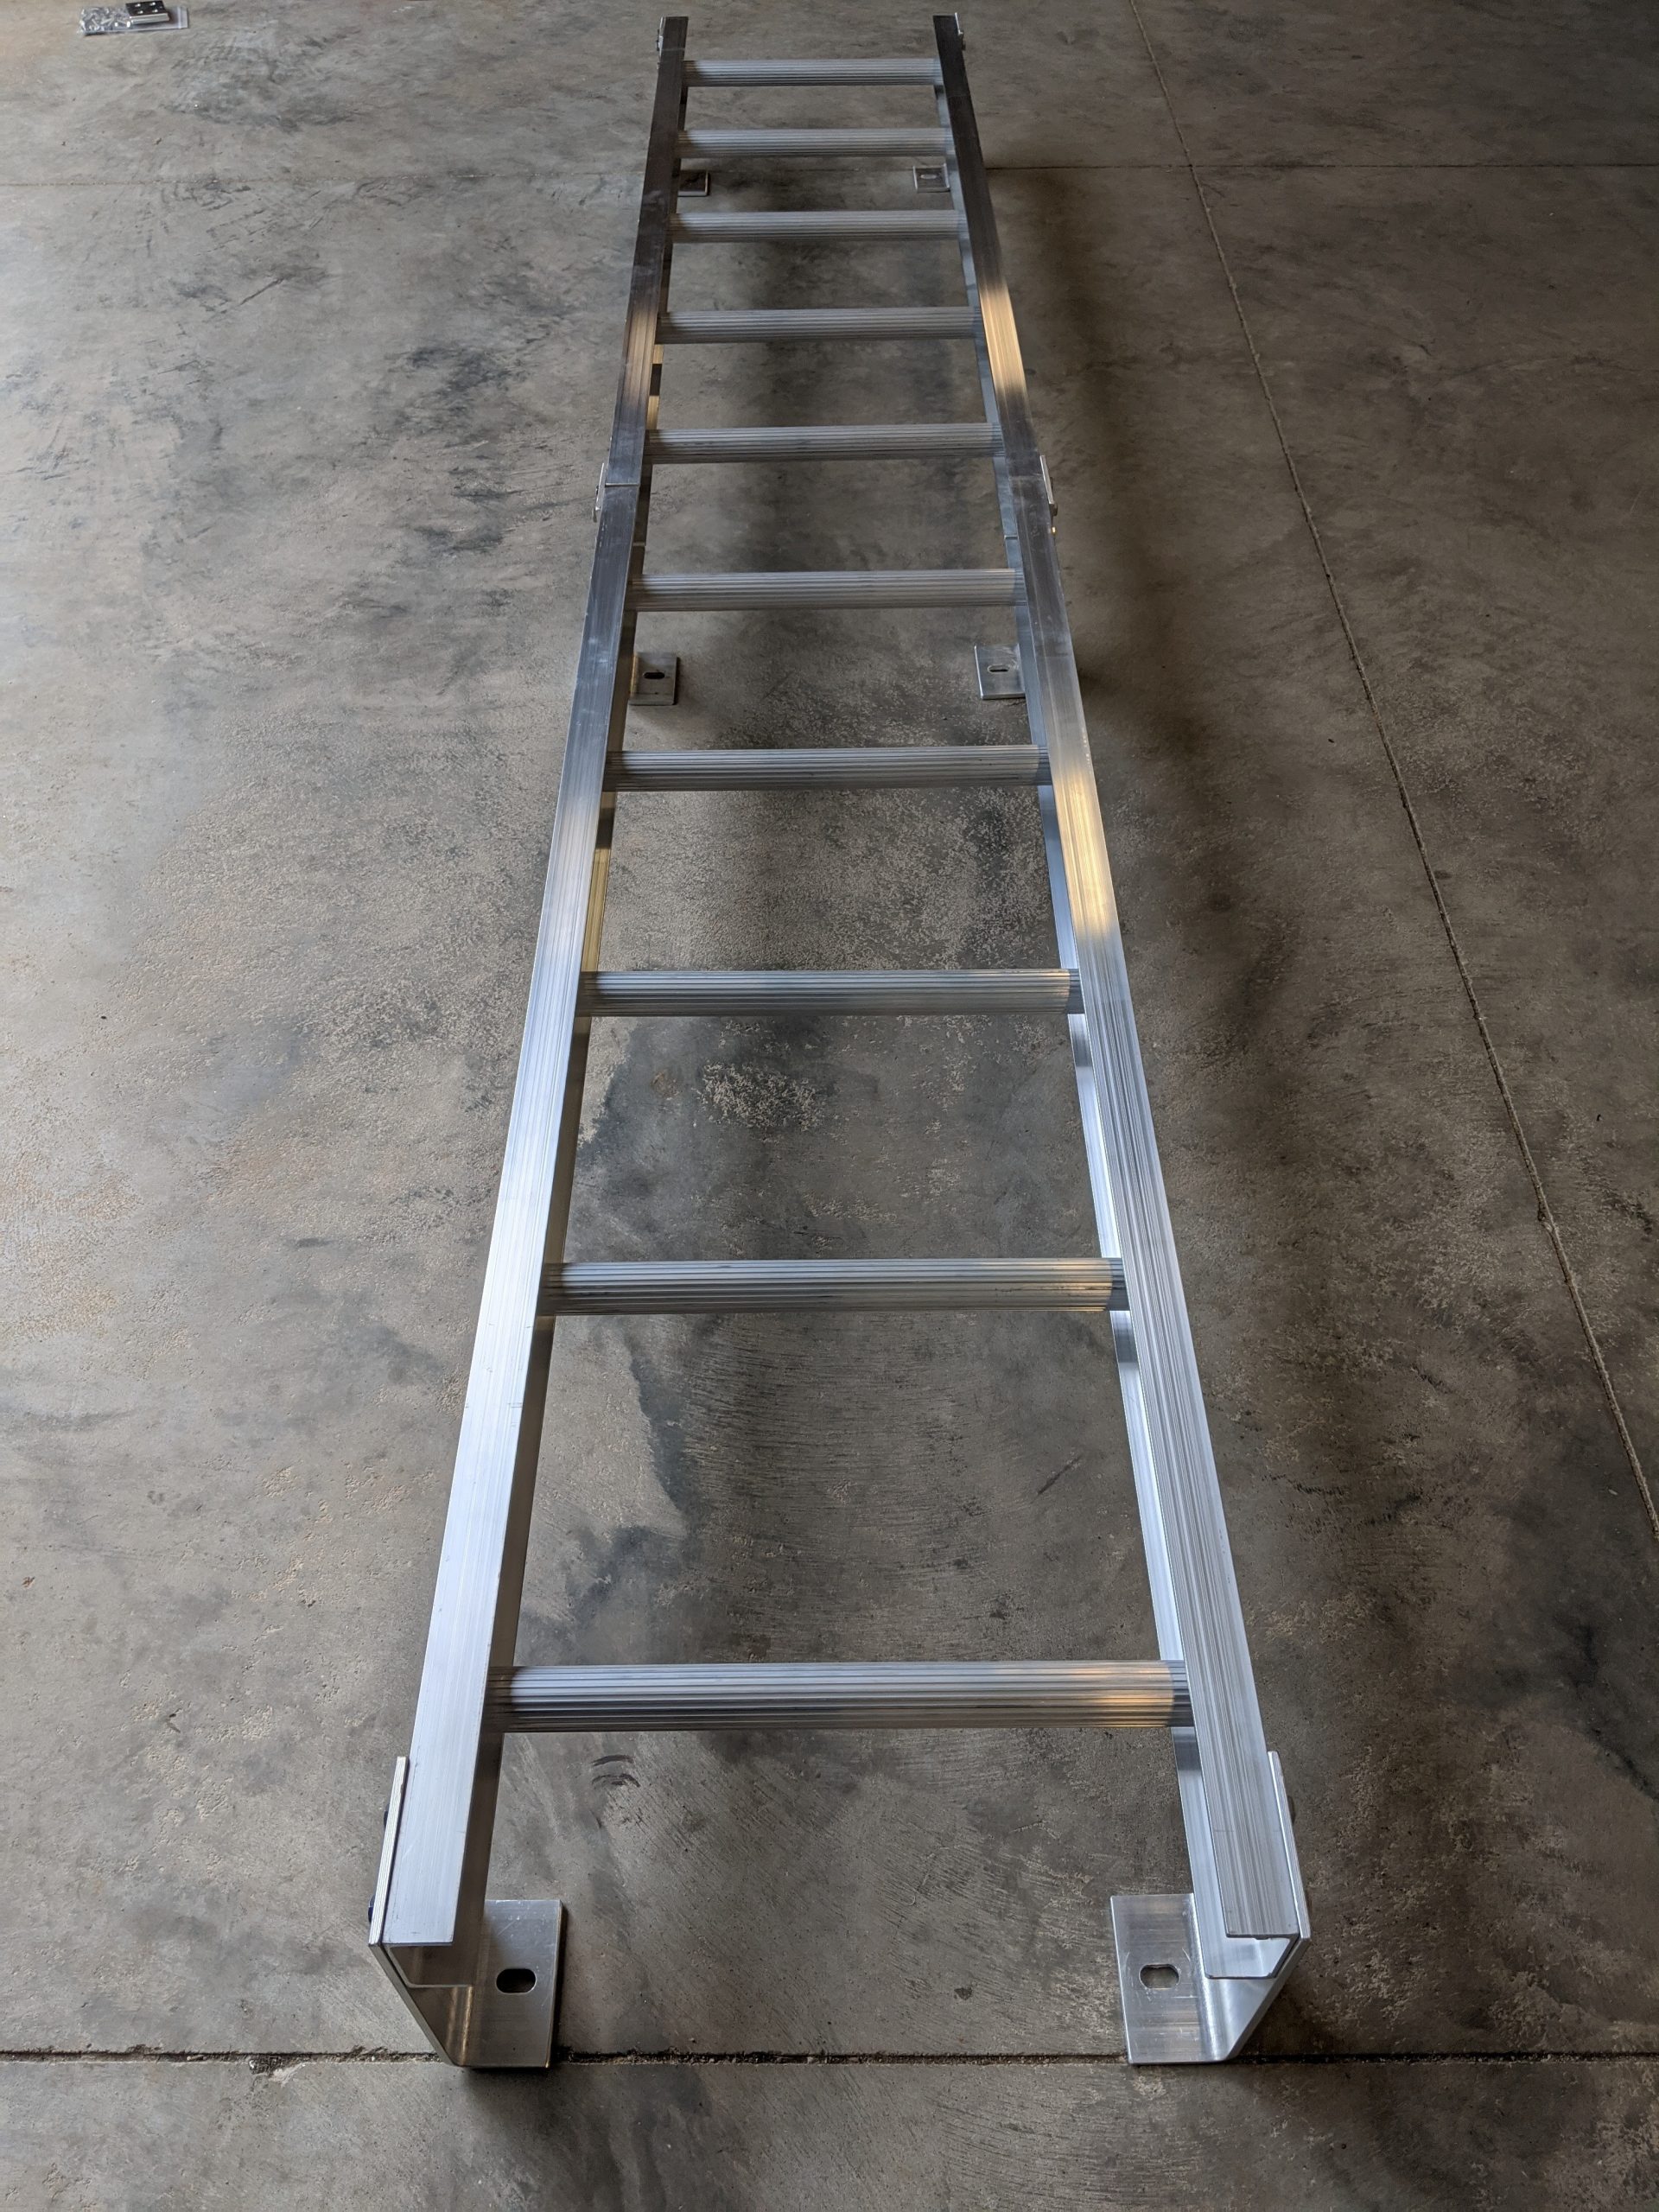 fixed ladders